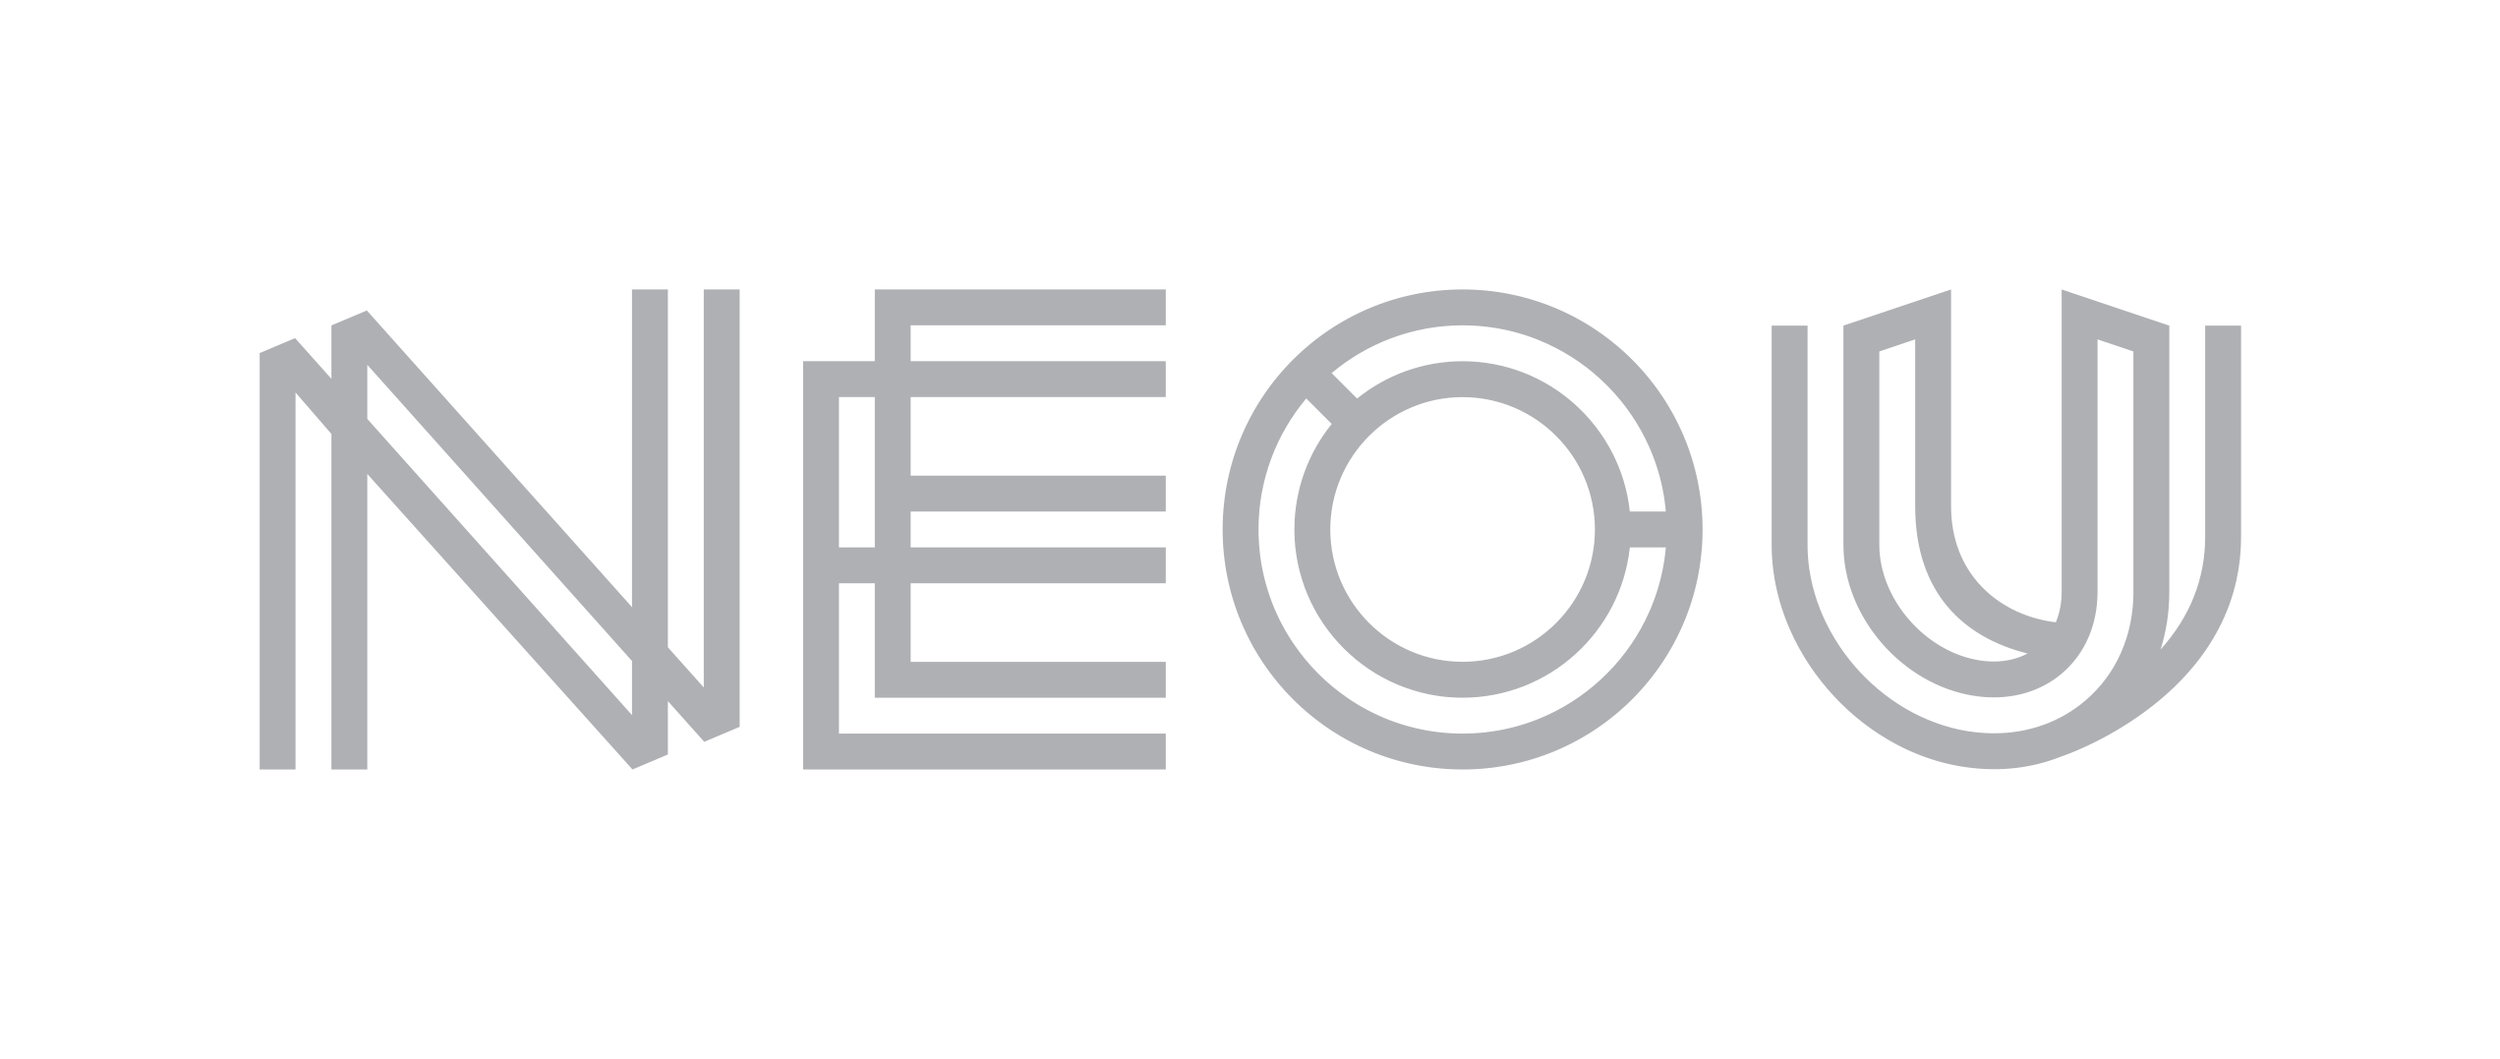 NEOU_logo.jpg